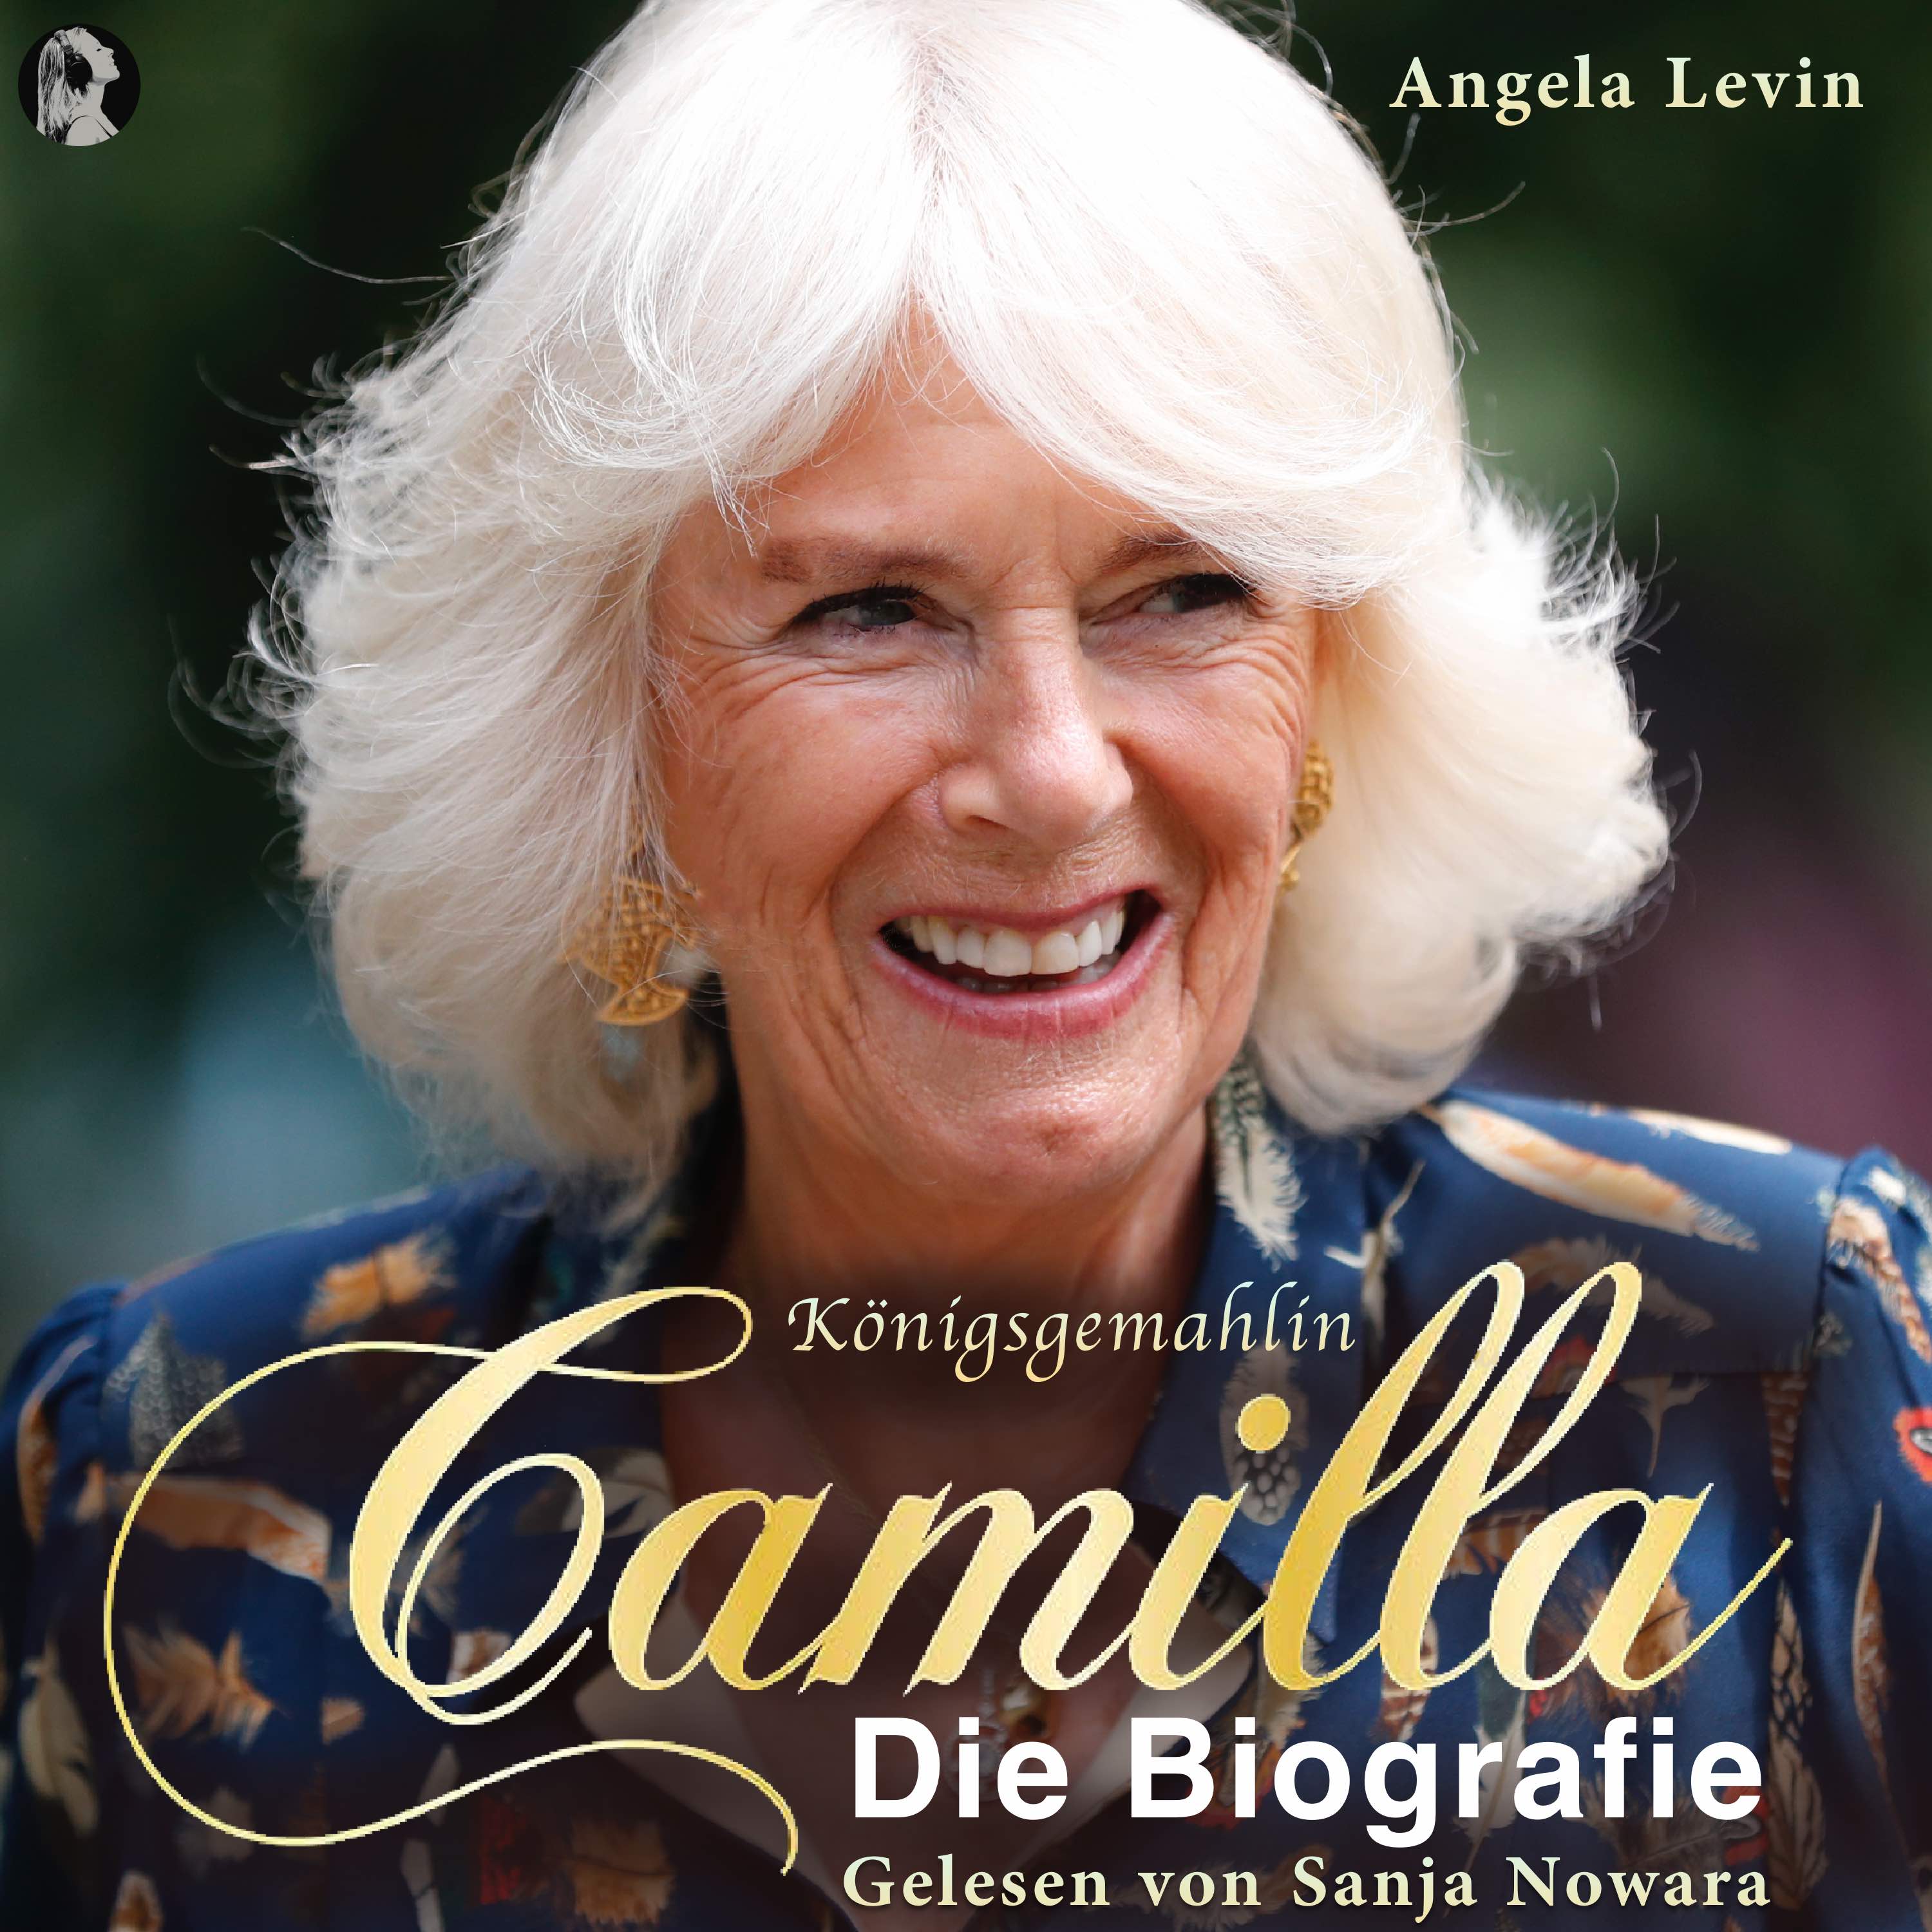 Königsgemahlin Camilla – Die Biografie